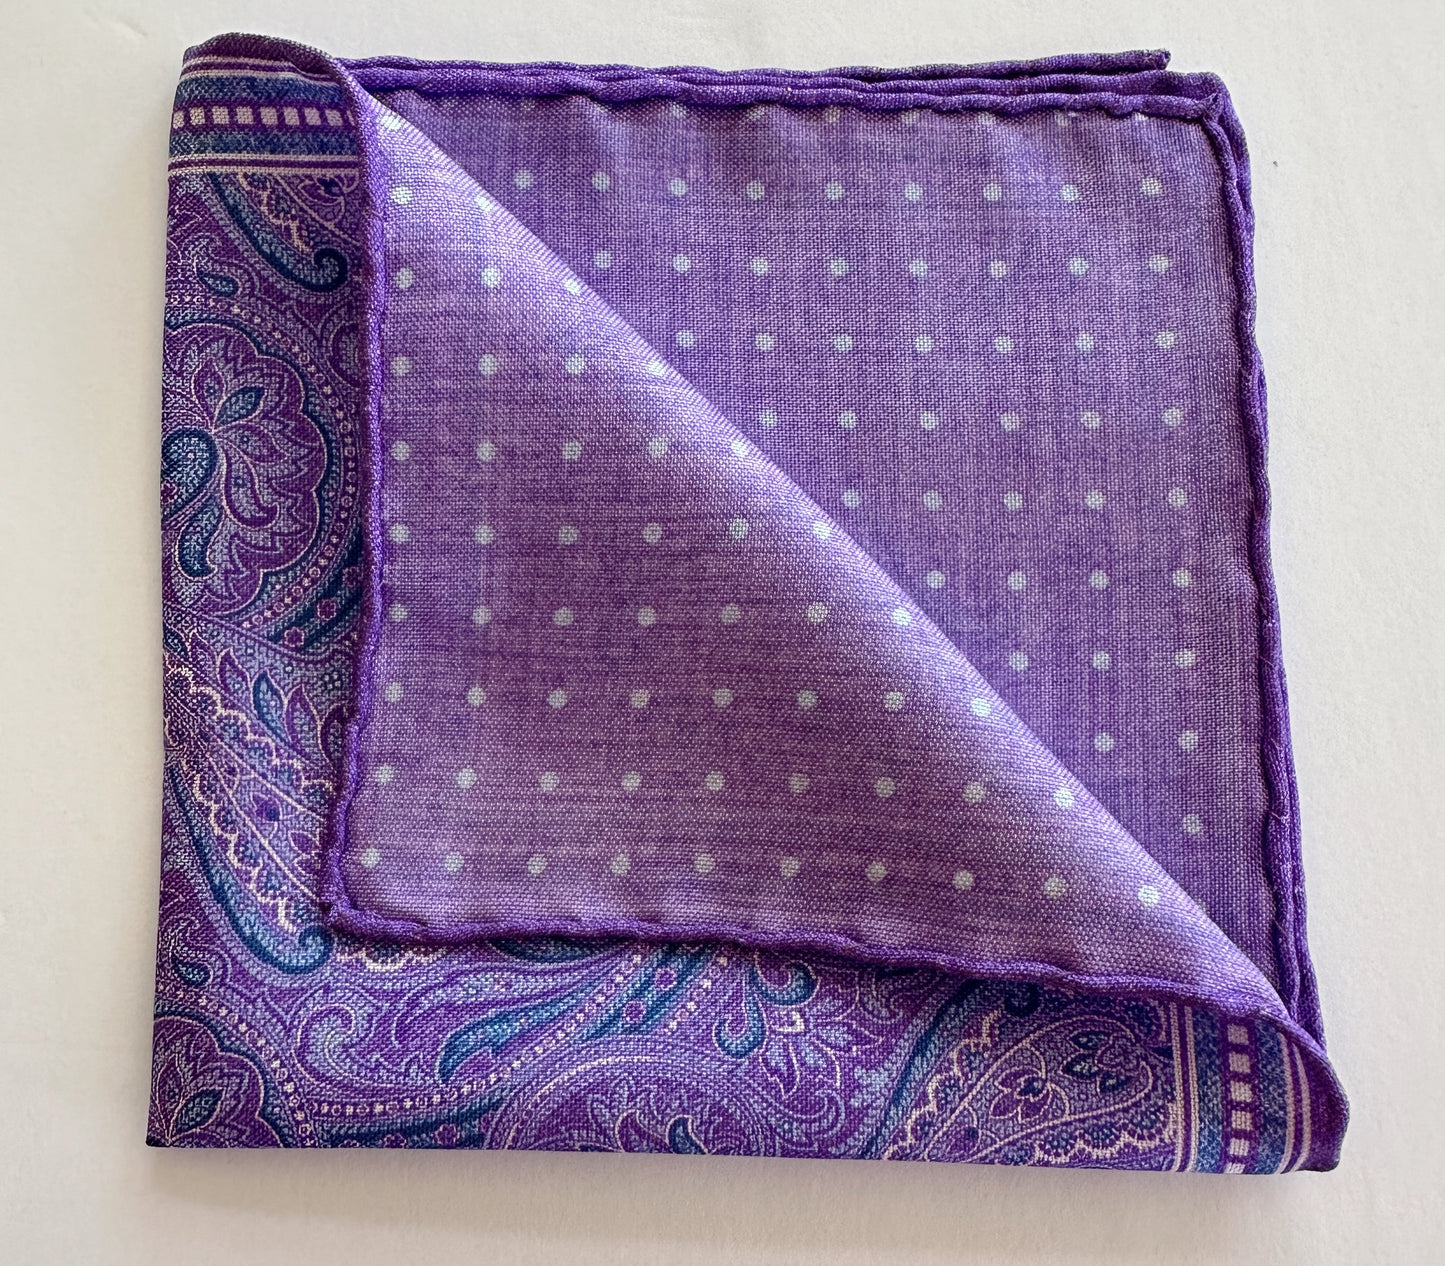 David Donahue Pocket Square - Purple Paisley/Polka Dots